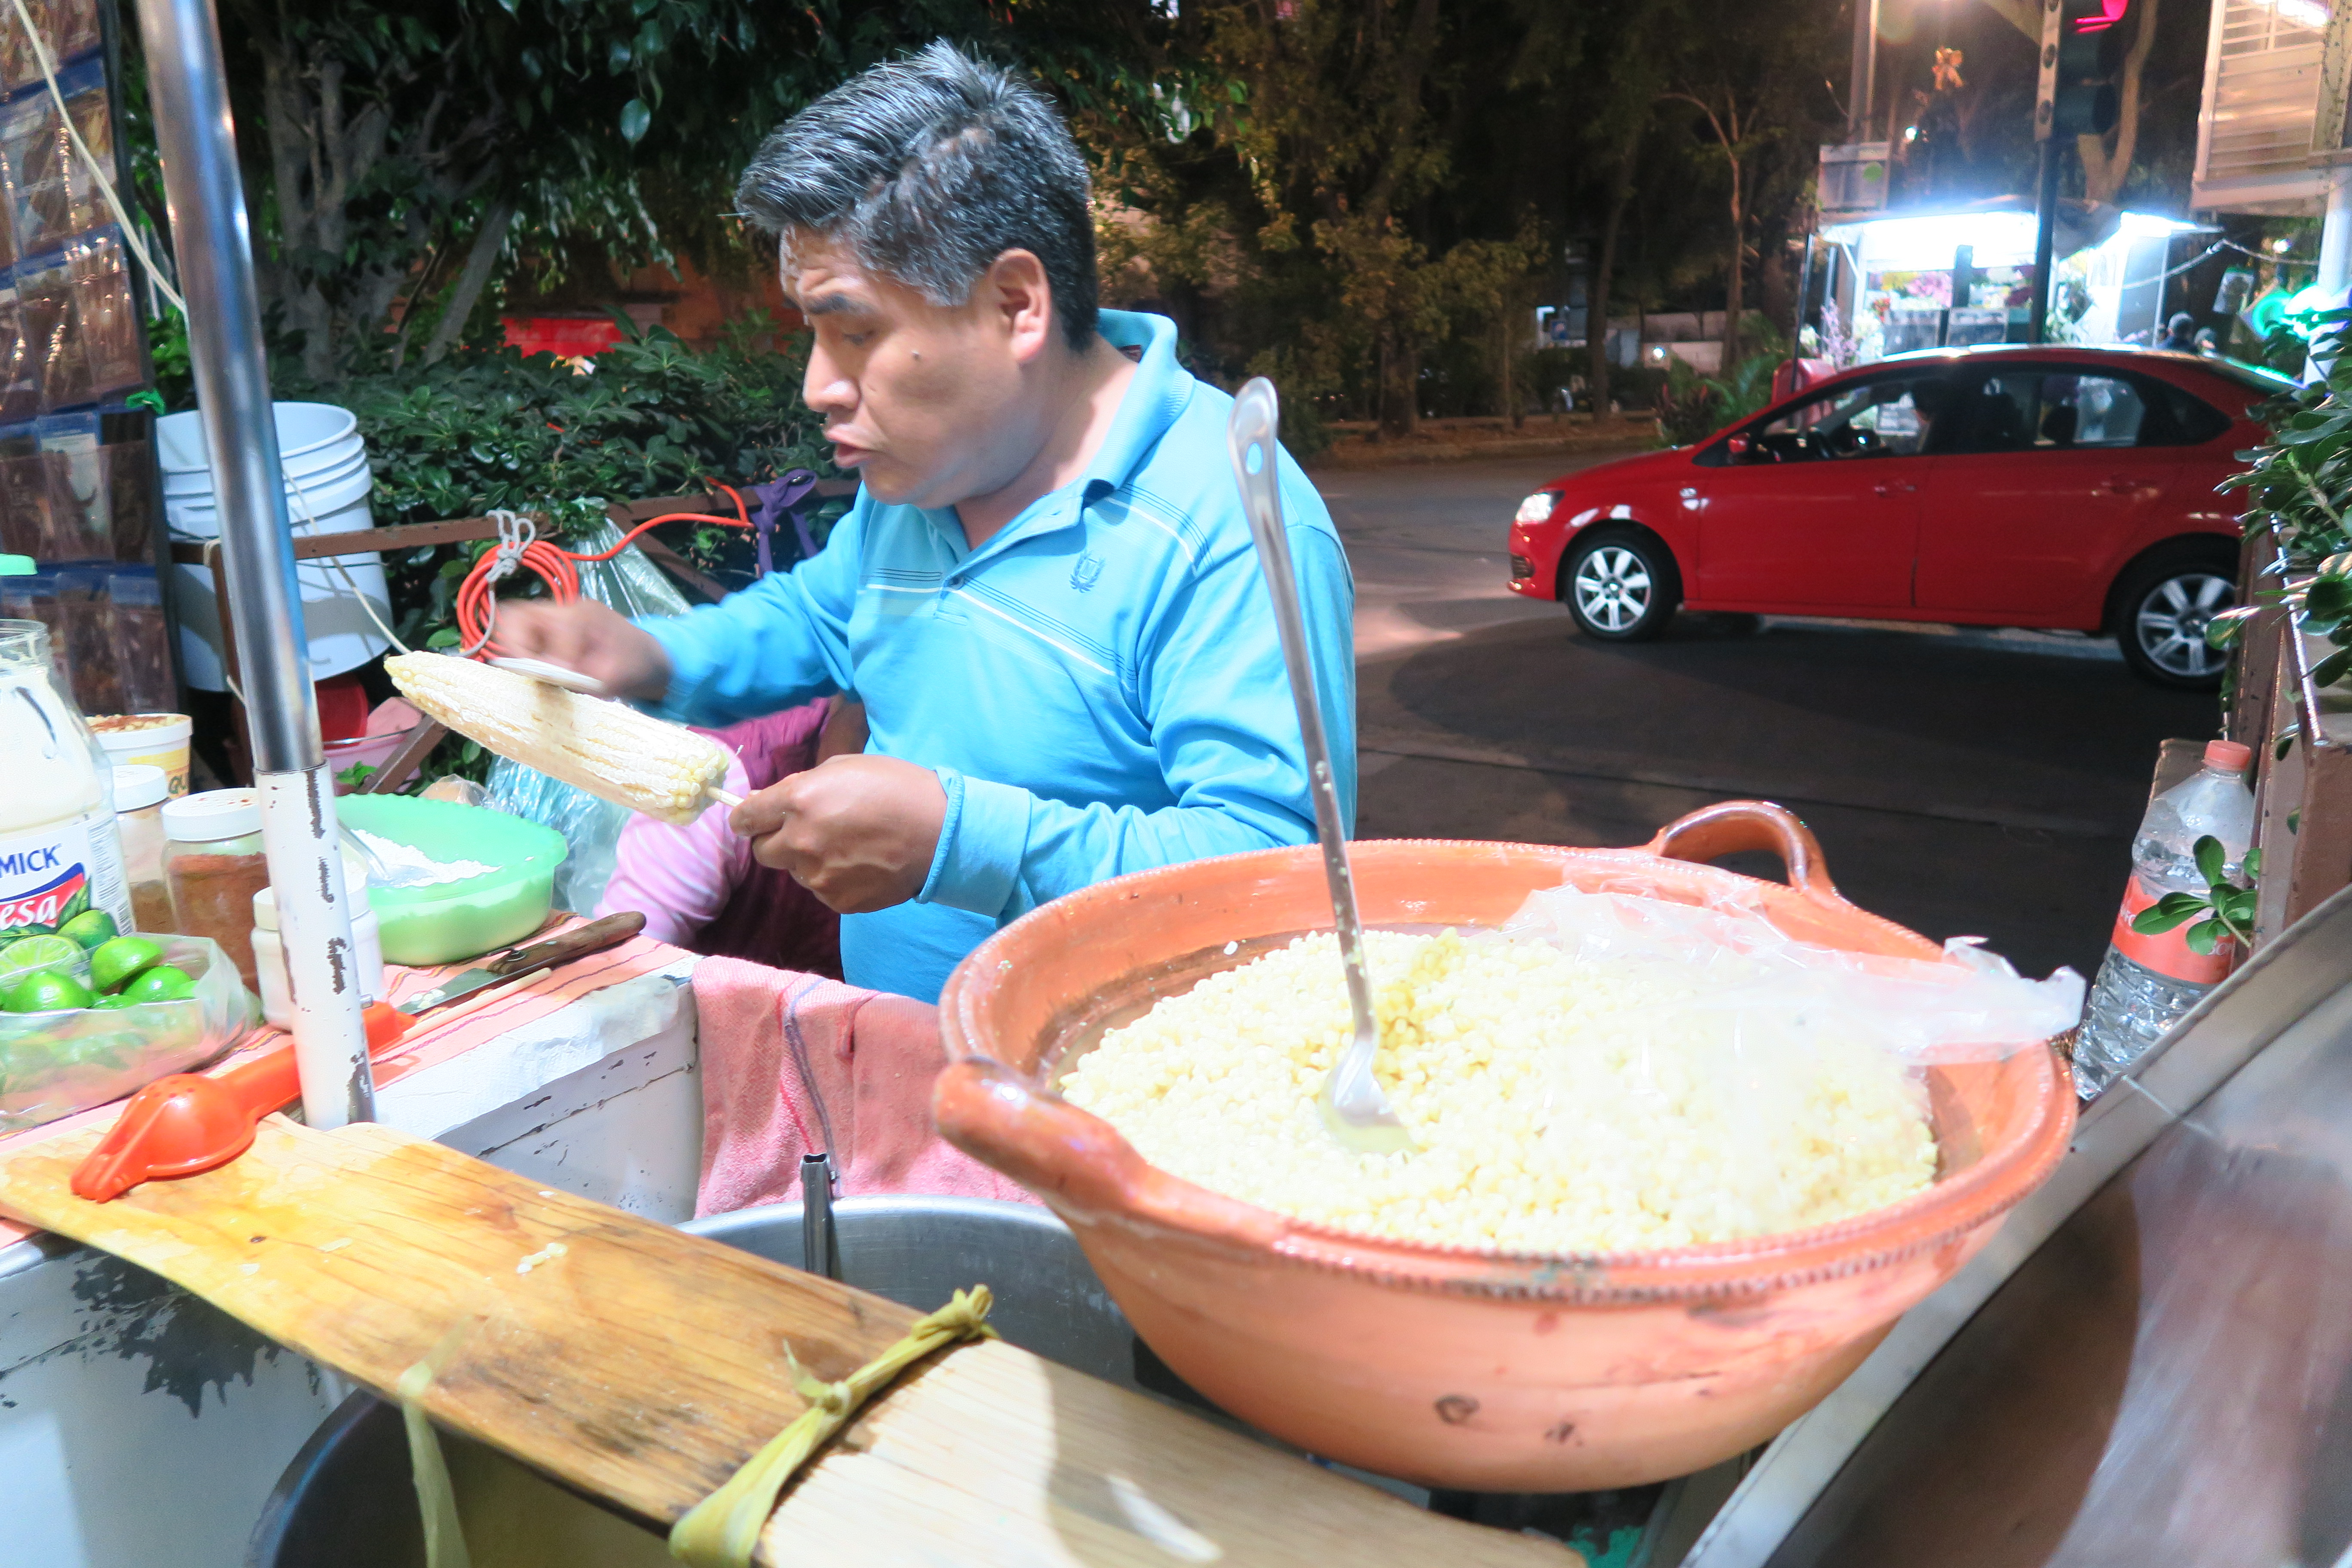 Vendeur de maïs dans les rues de Mexico city